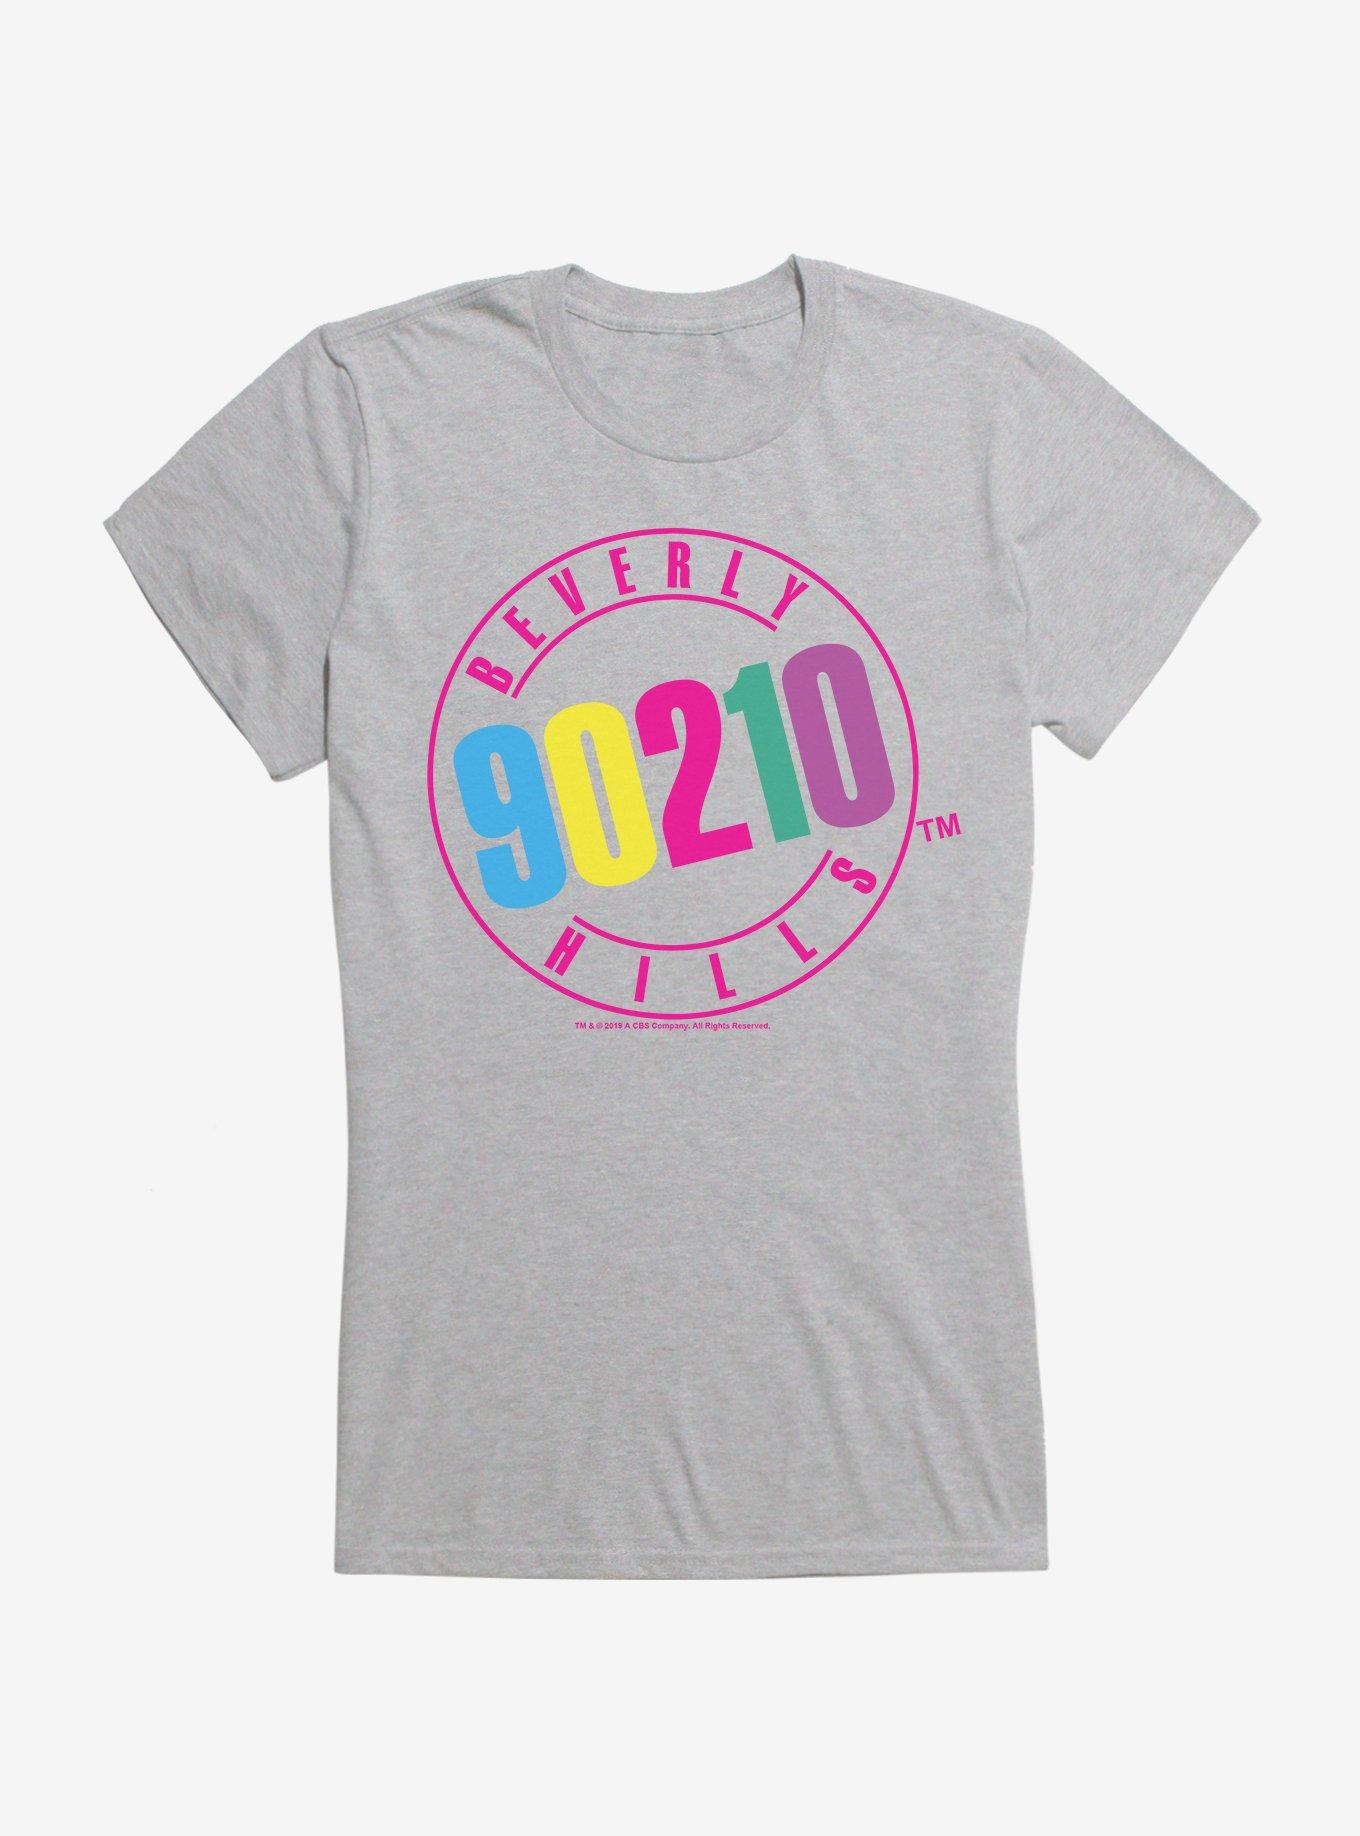 Beverly Hills 90210 Logo Girls T-Shirt, HEATHER, hi-res